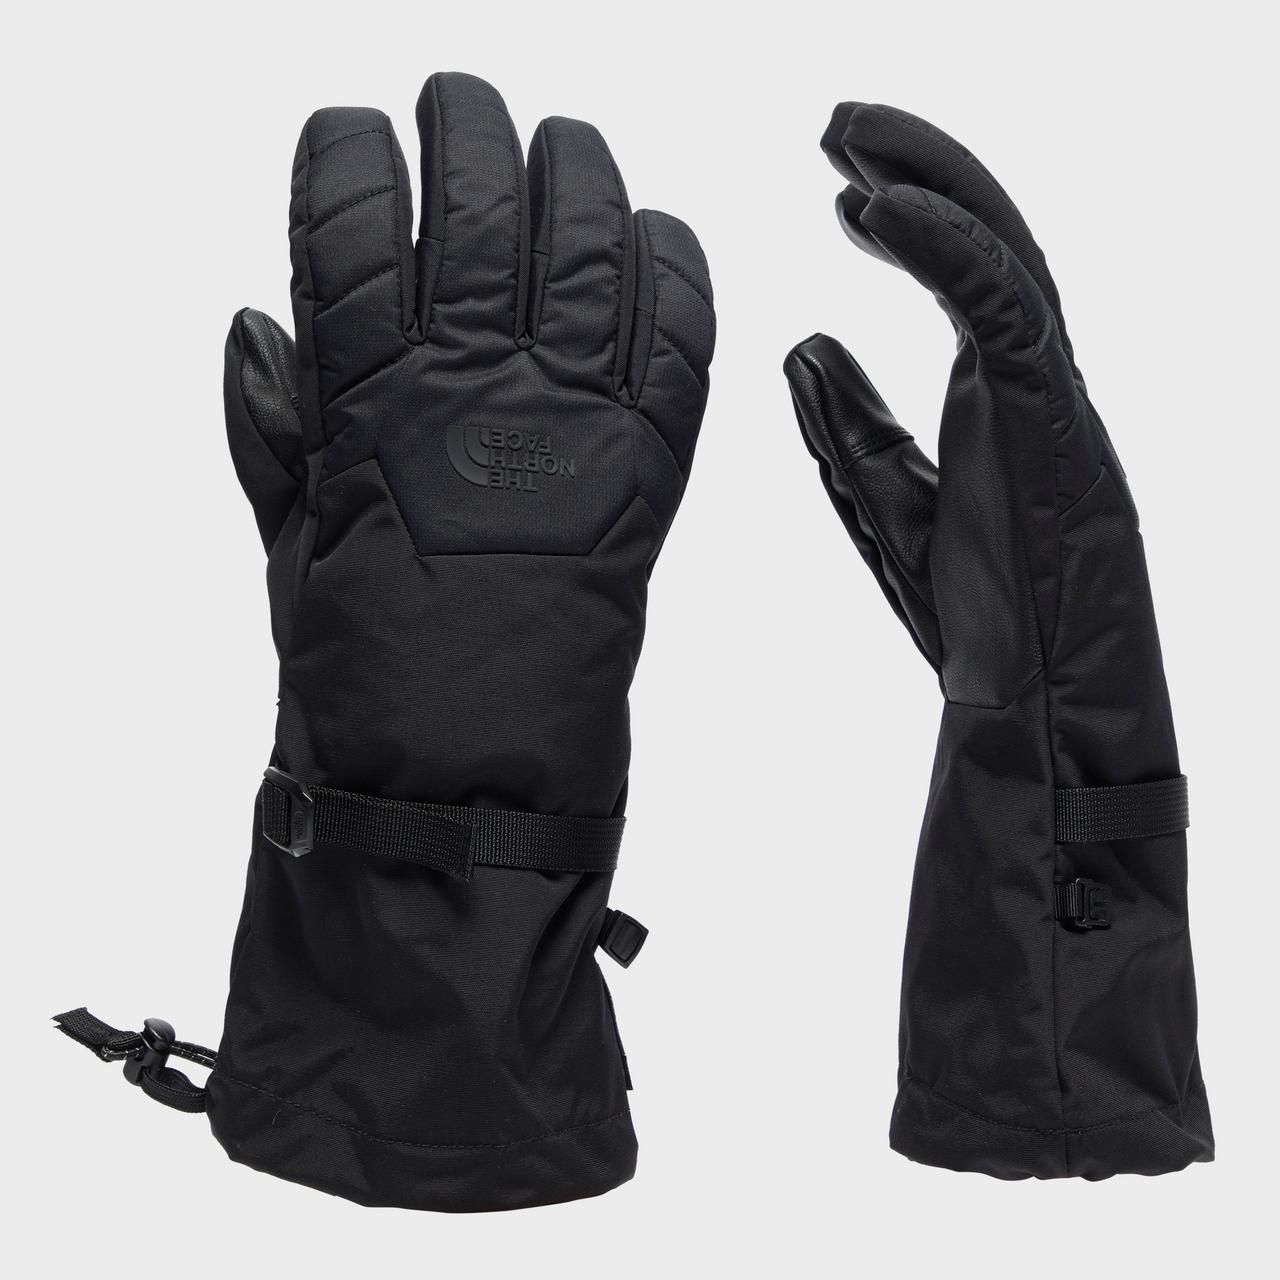 The North Face Men’s Revelstoke Etip Gloves NF0A34M1 The North Face ktmart 1